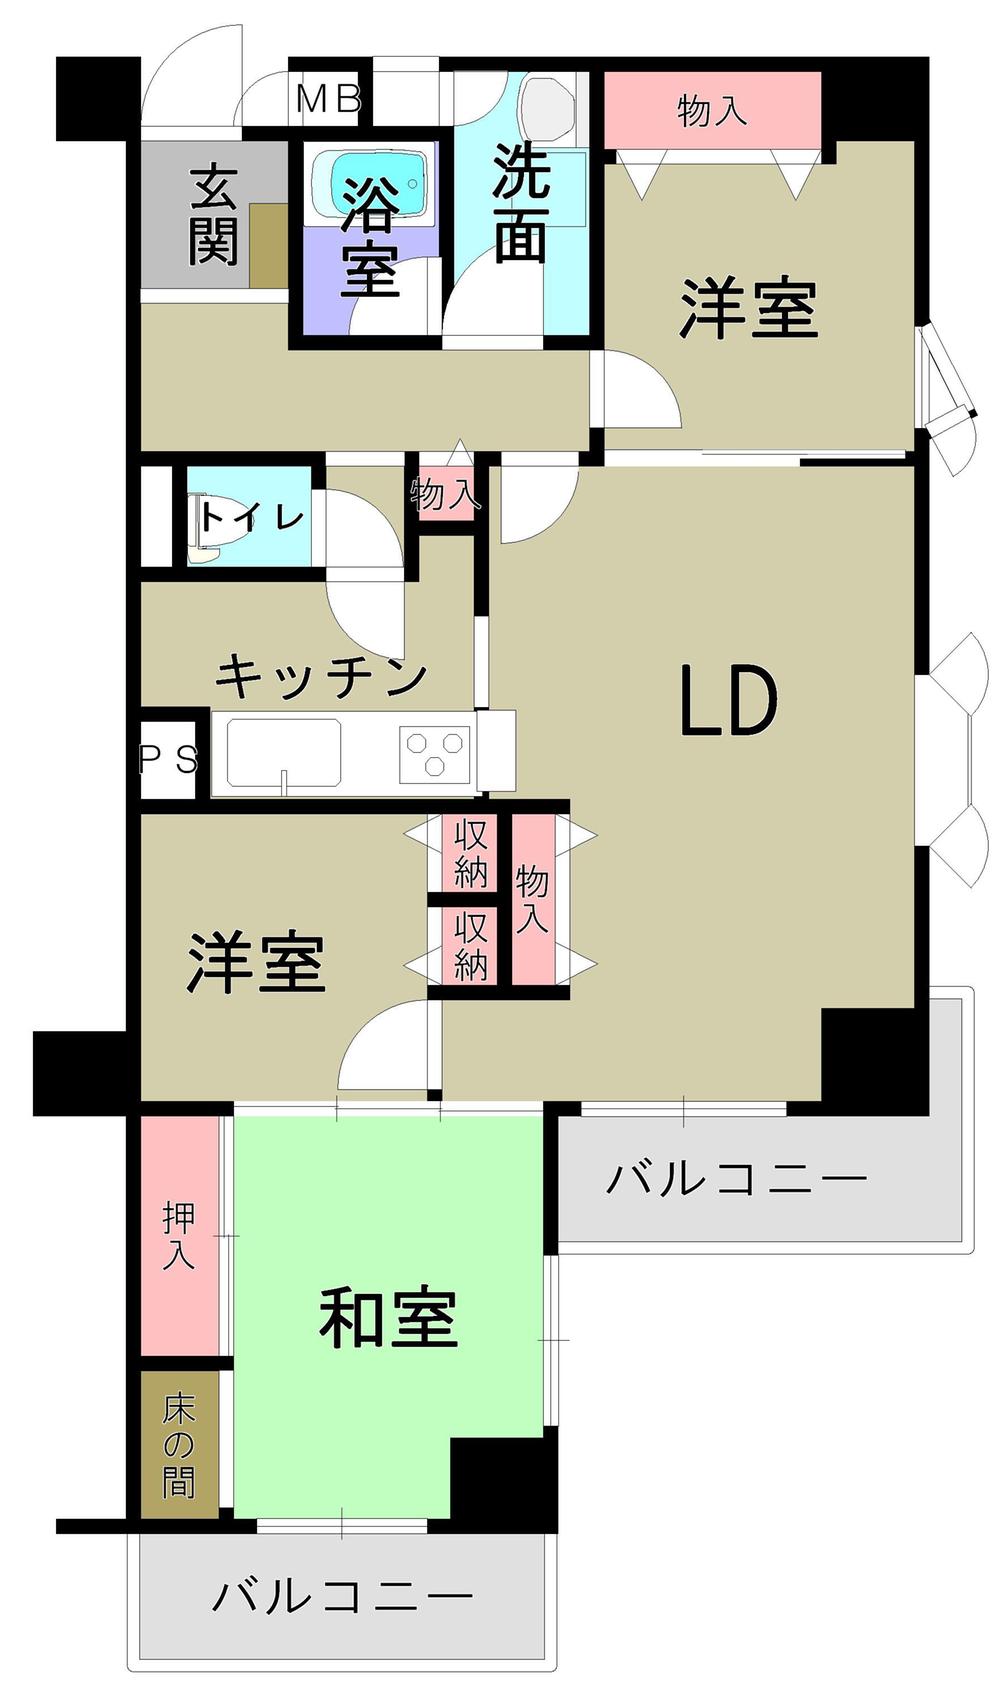 Floor plan. 3LDK, Price 21,800,000 yen, Footprint 71.6 sq m , Balcony area 8.51 sq m 8 floor ・ Sunshine in the southeast corner room two faces lighting ・ ventilation ・ View is good